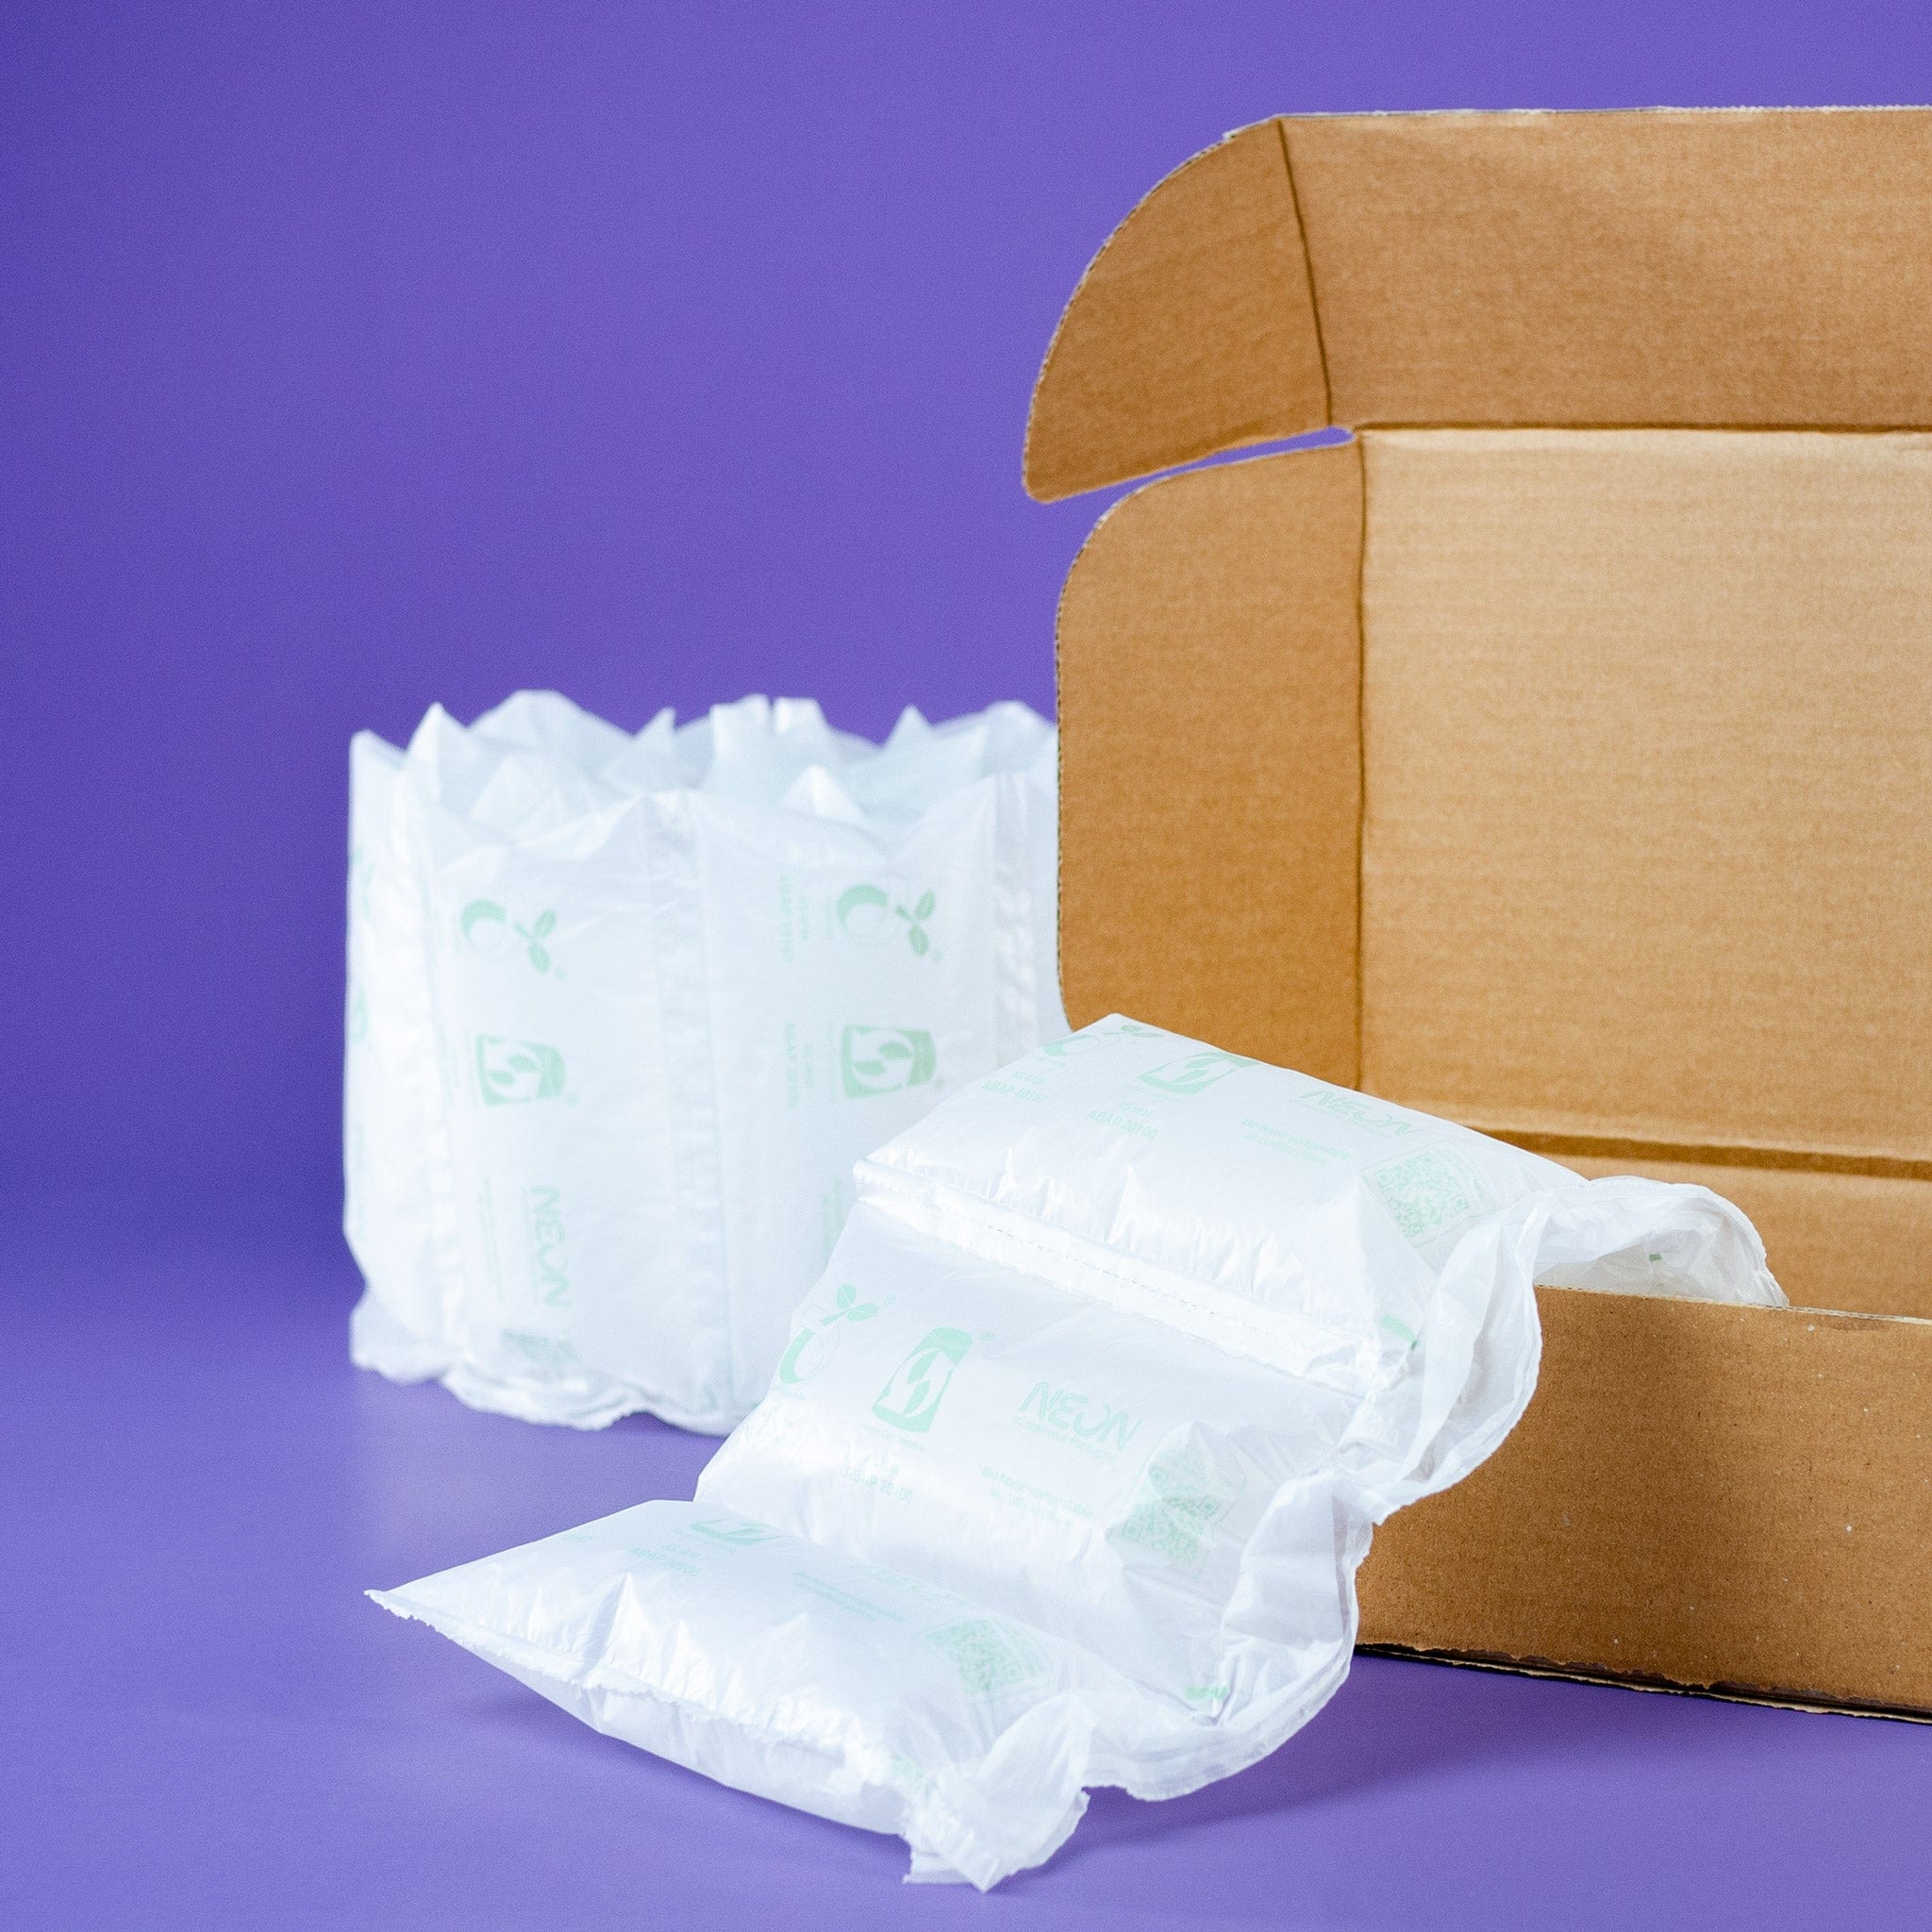 NE000333---Biodegradable Void Filler Cushion inside the cardboard box